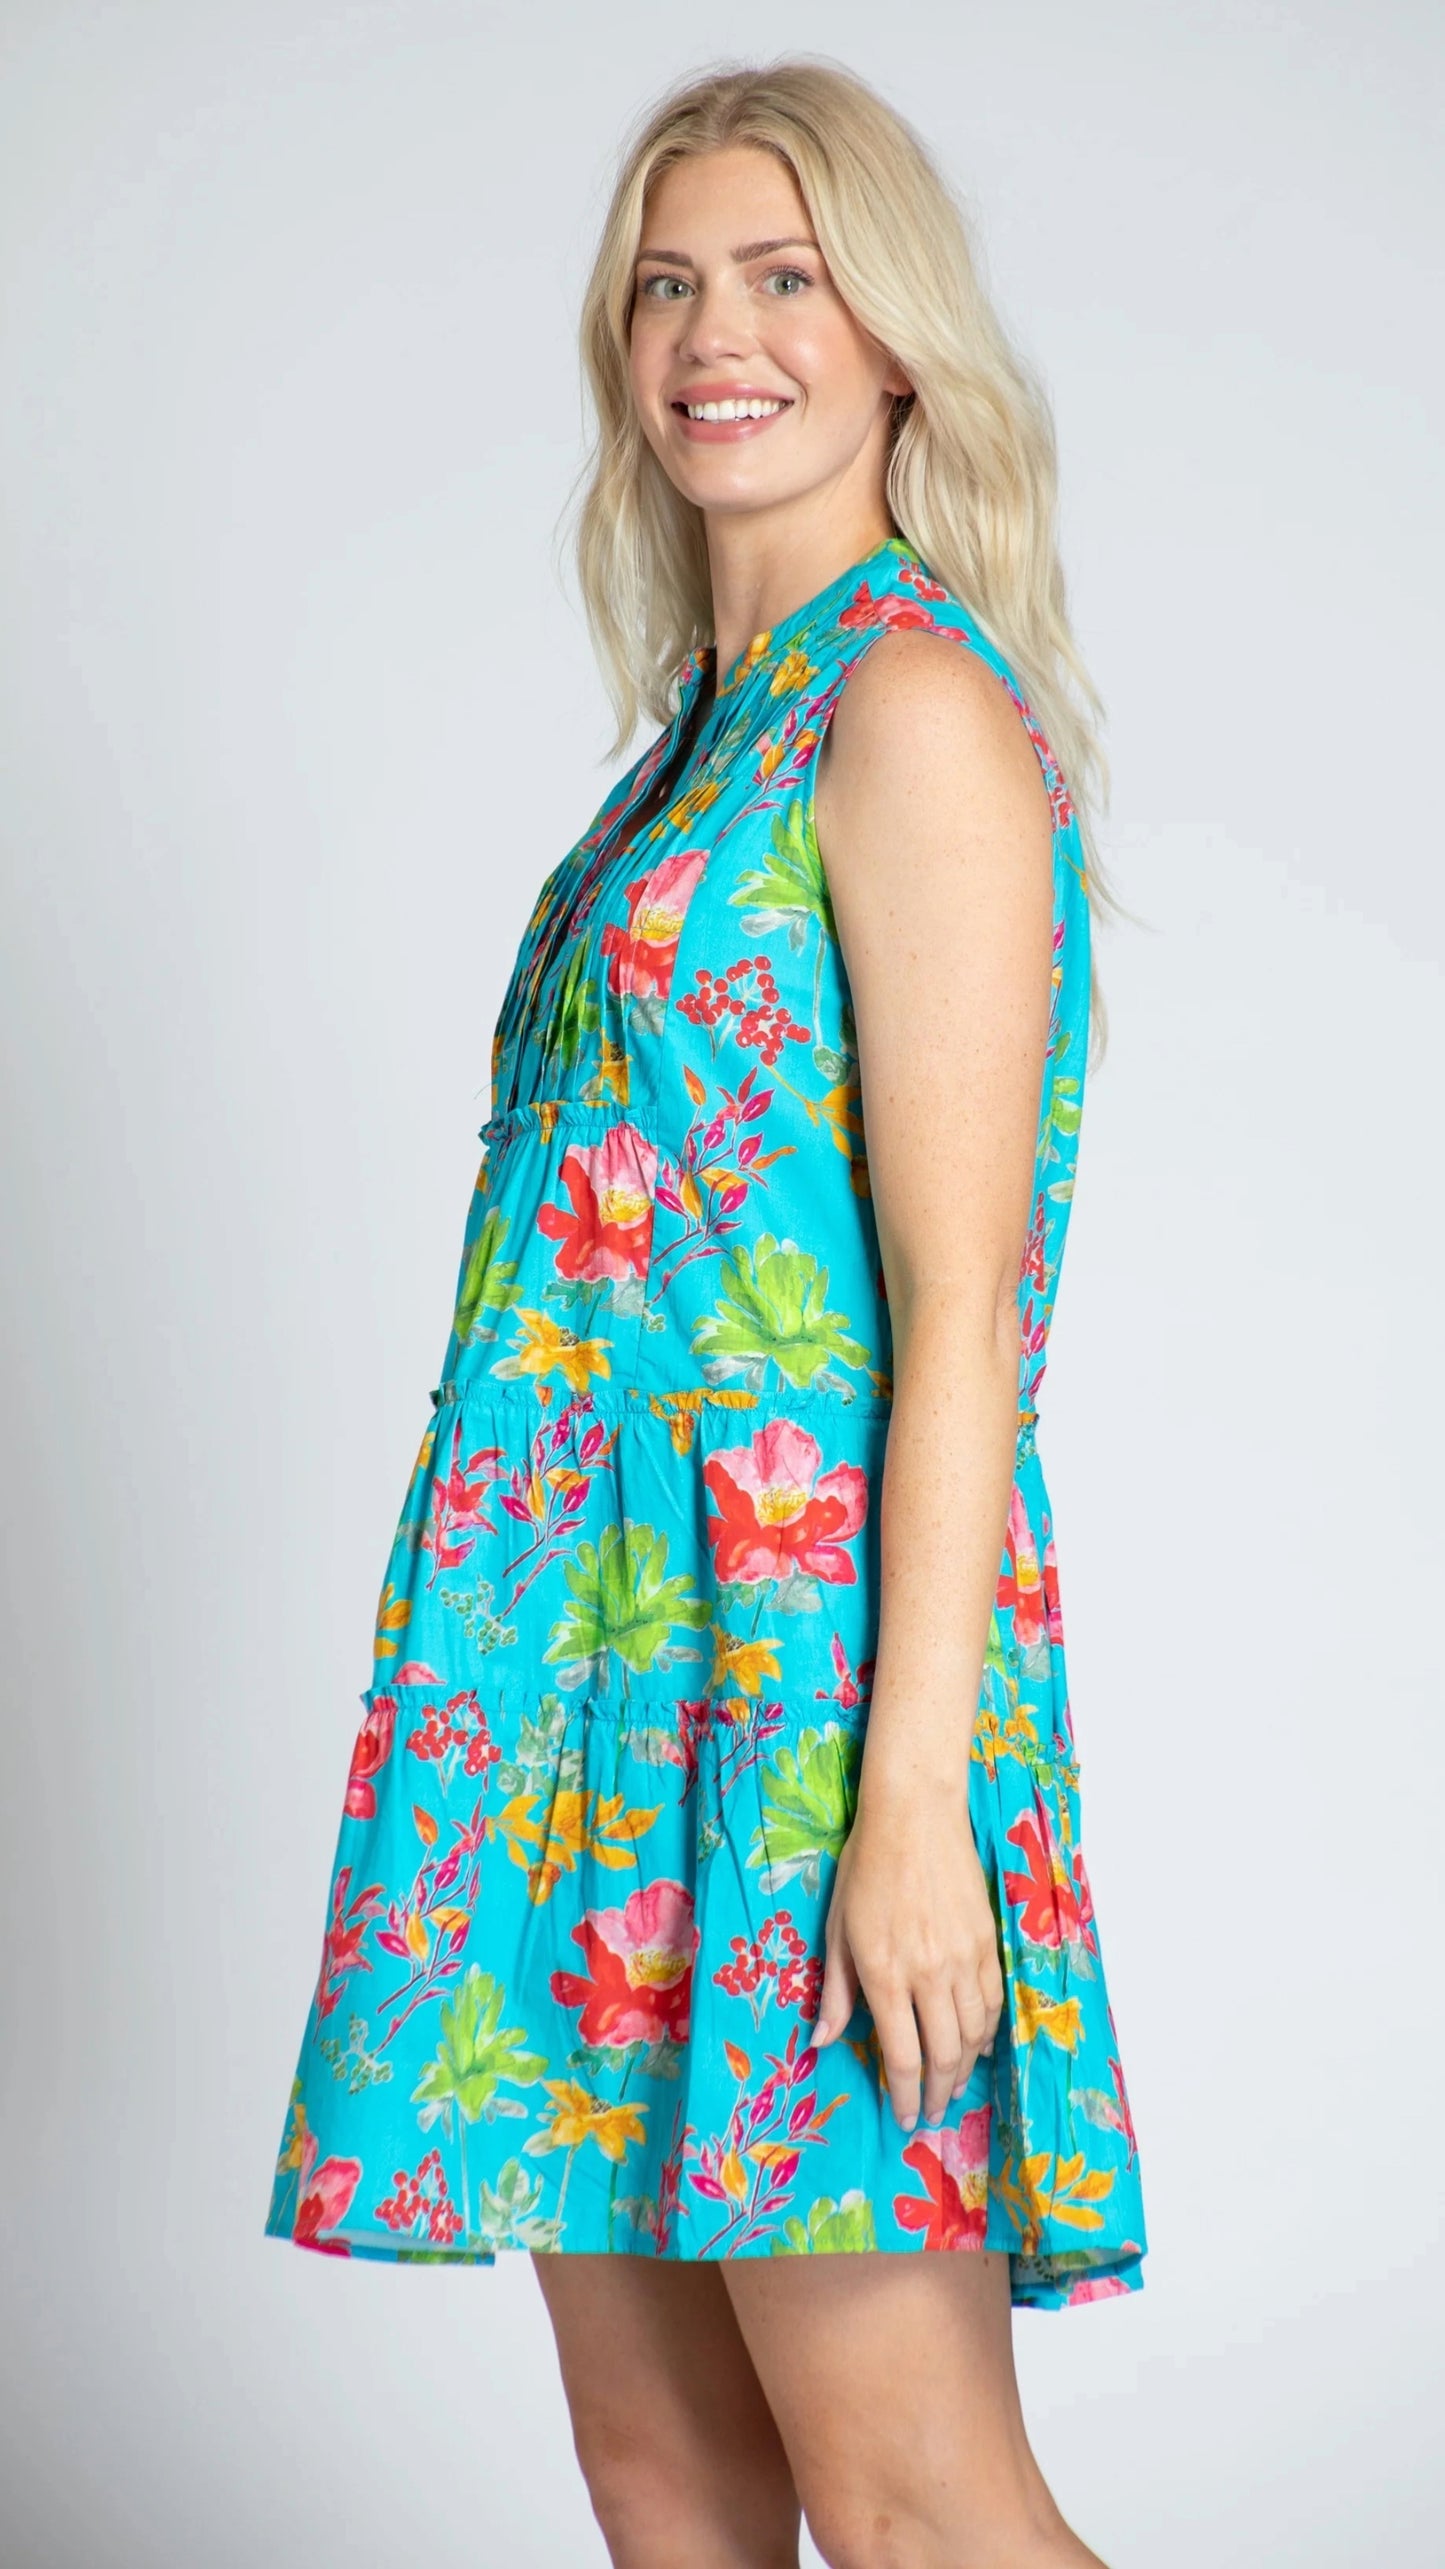 APNY Sleeveless Dress with Pintuck Detail - Multiple Prints